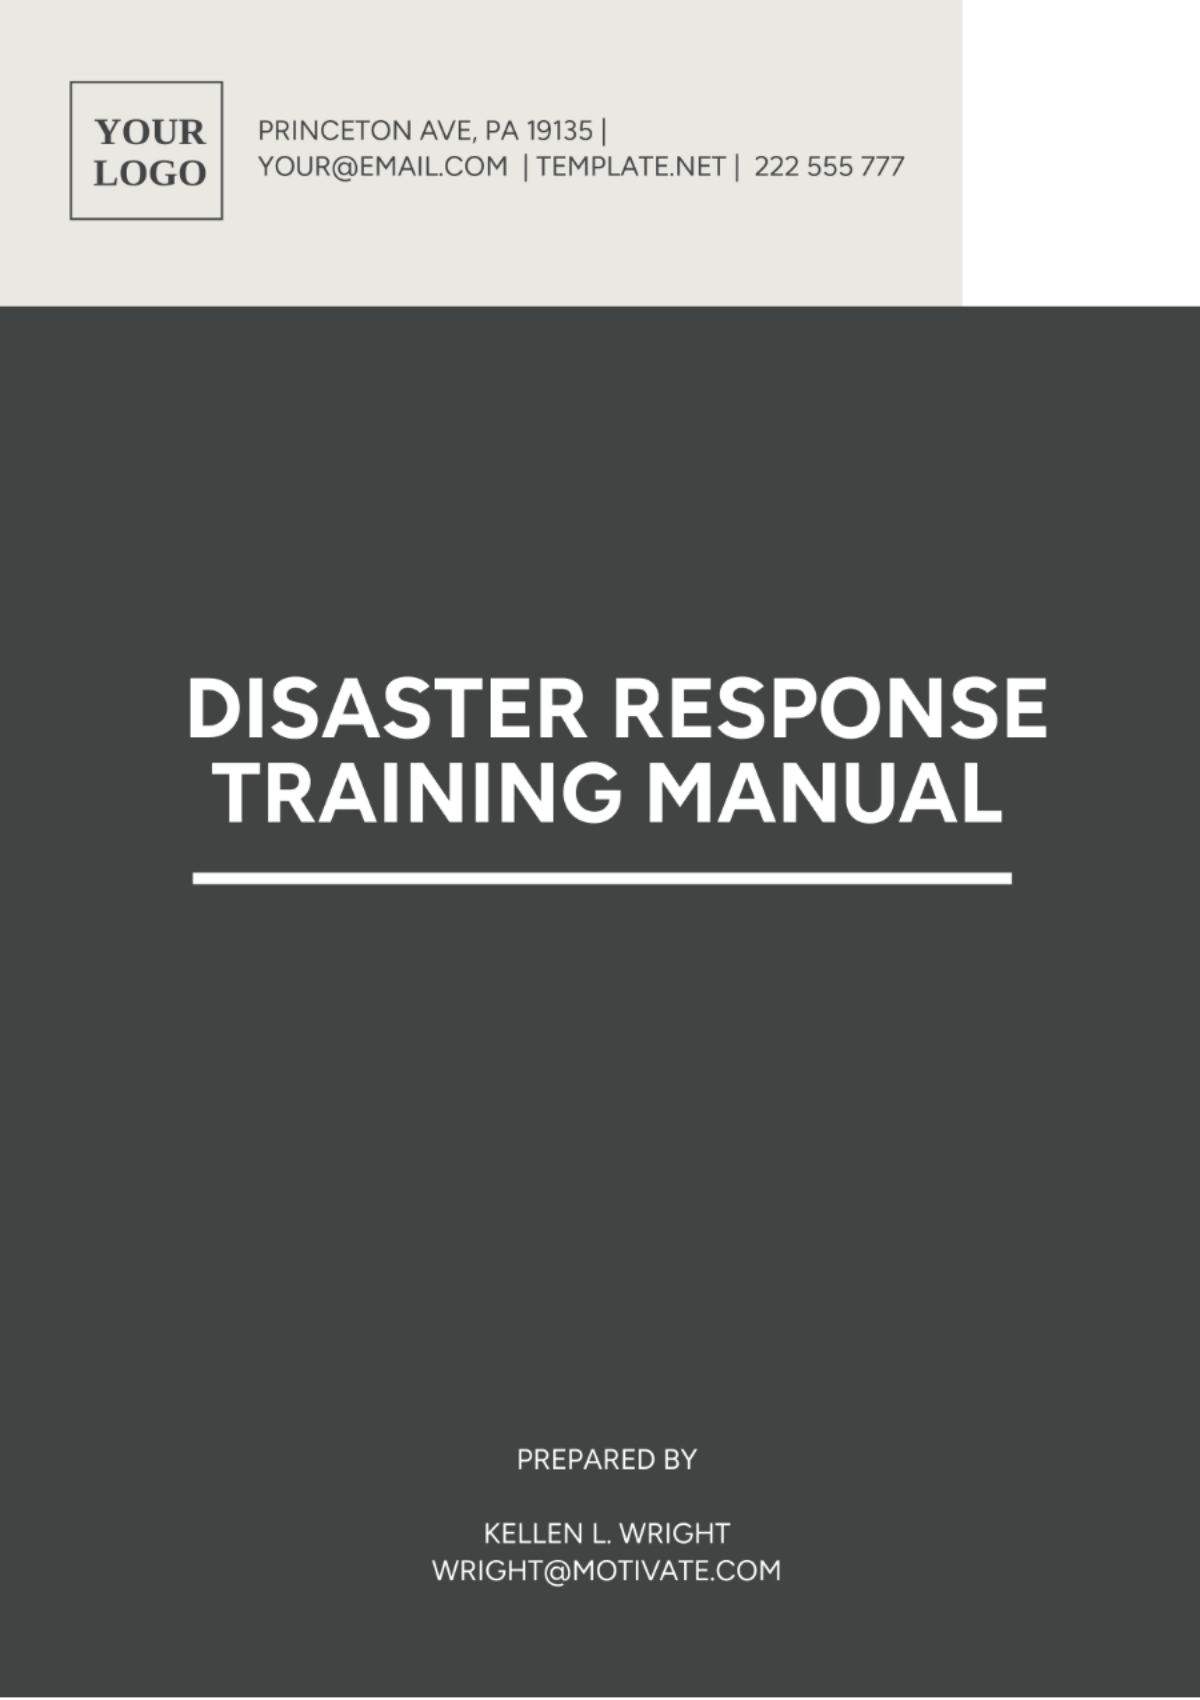 Disaster Response Training Manual Template